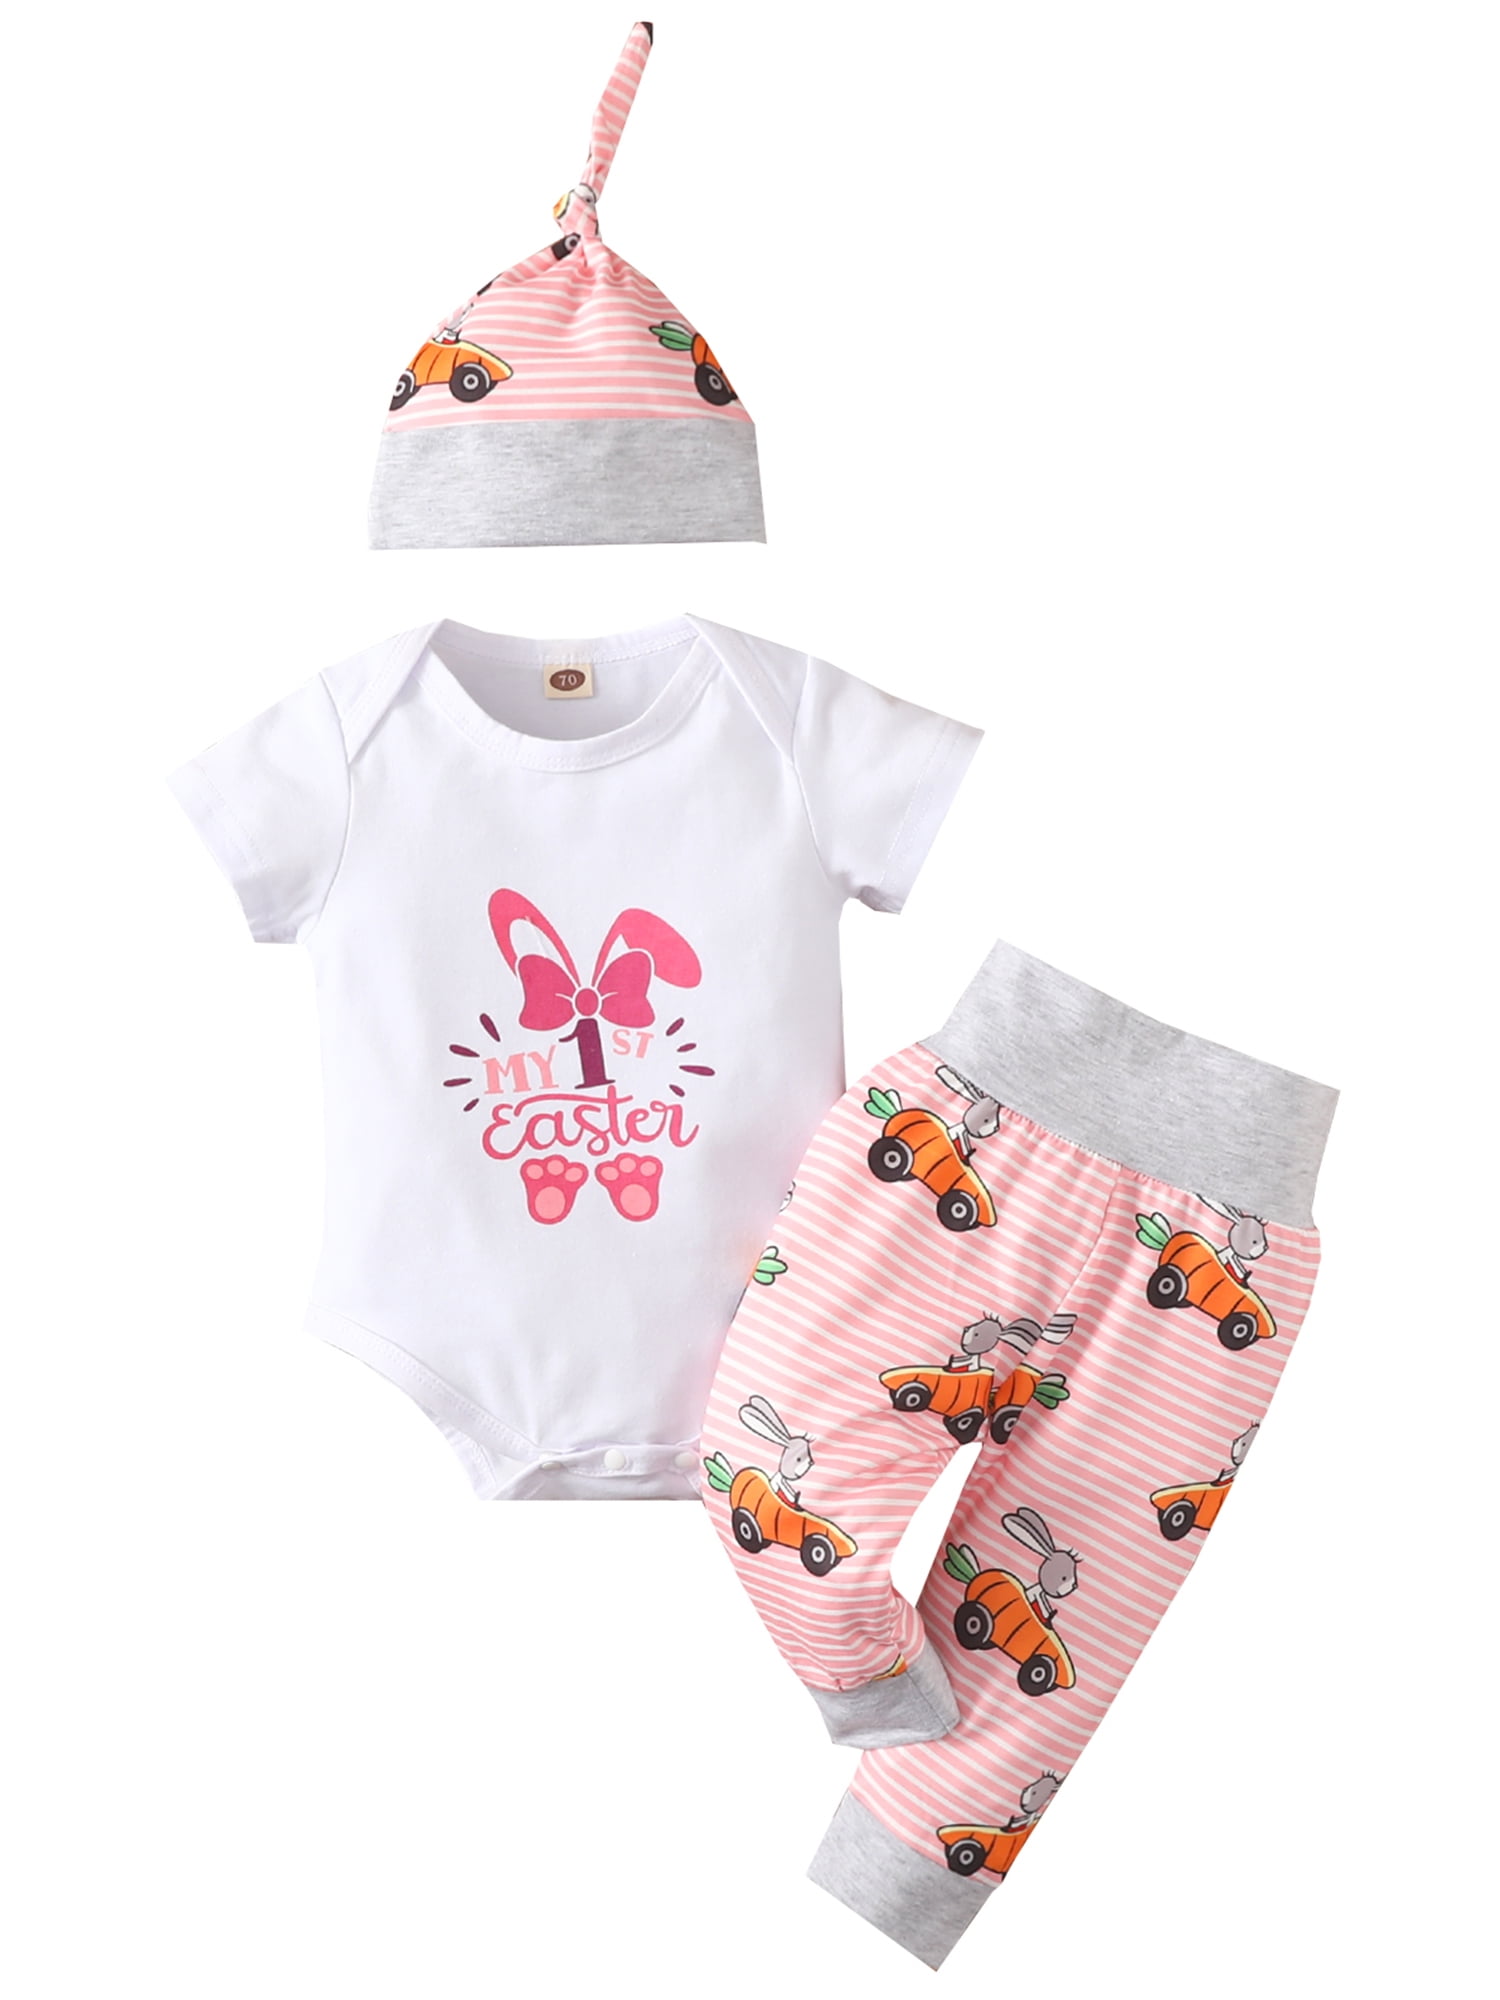 Toddler Infant Kids Baby Girl Cartoon Rabbit Tops Print Romper+Pants Clothes Set 